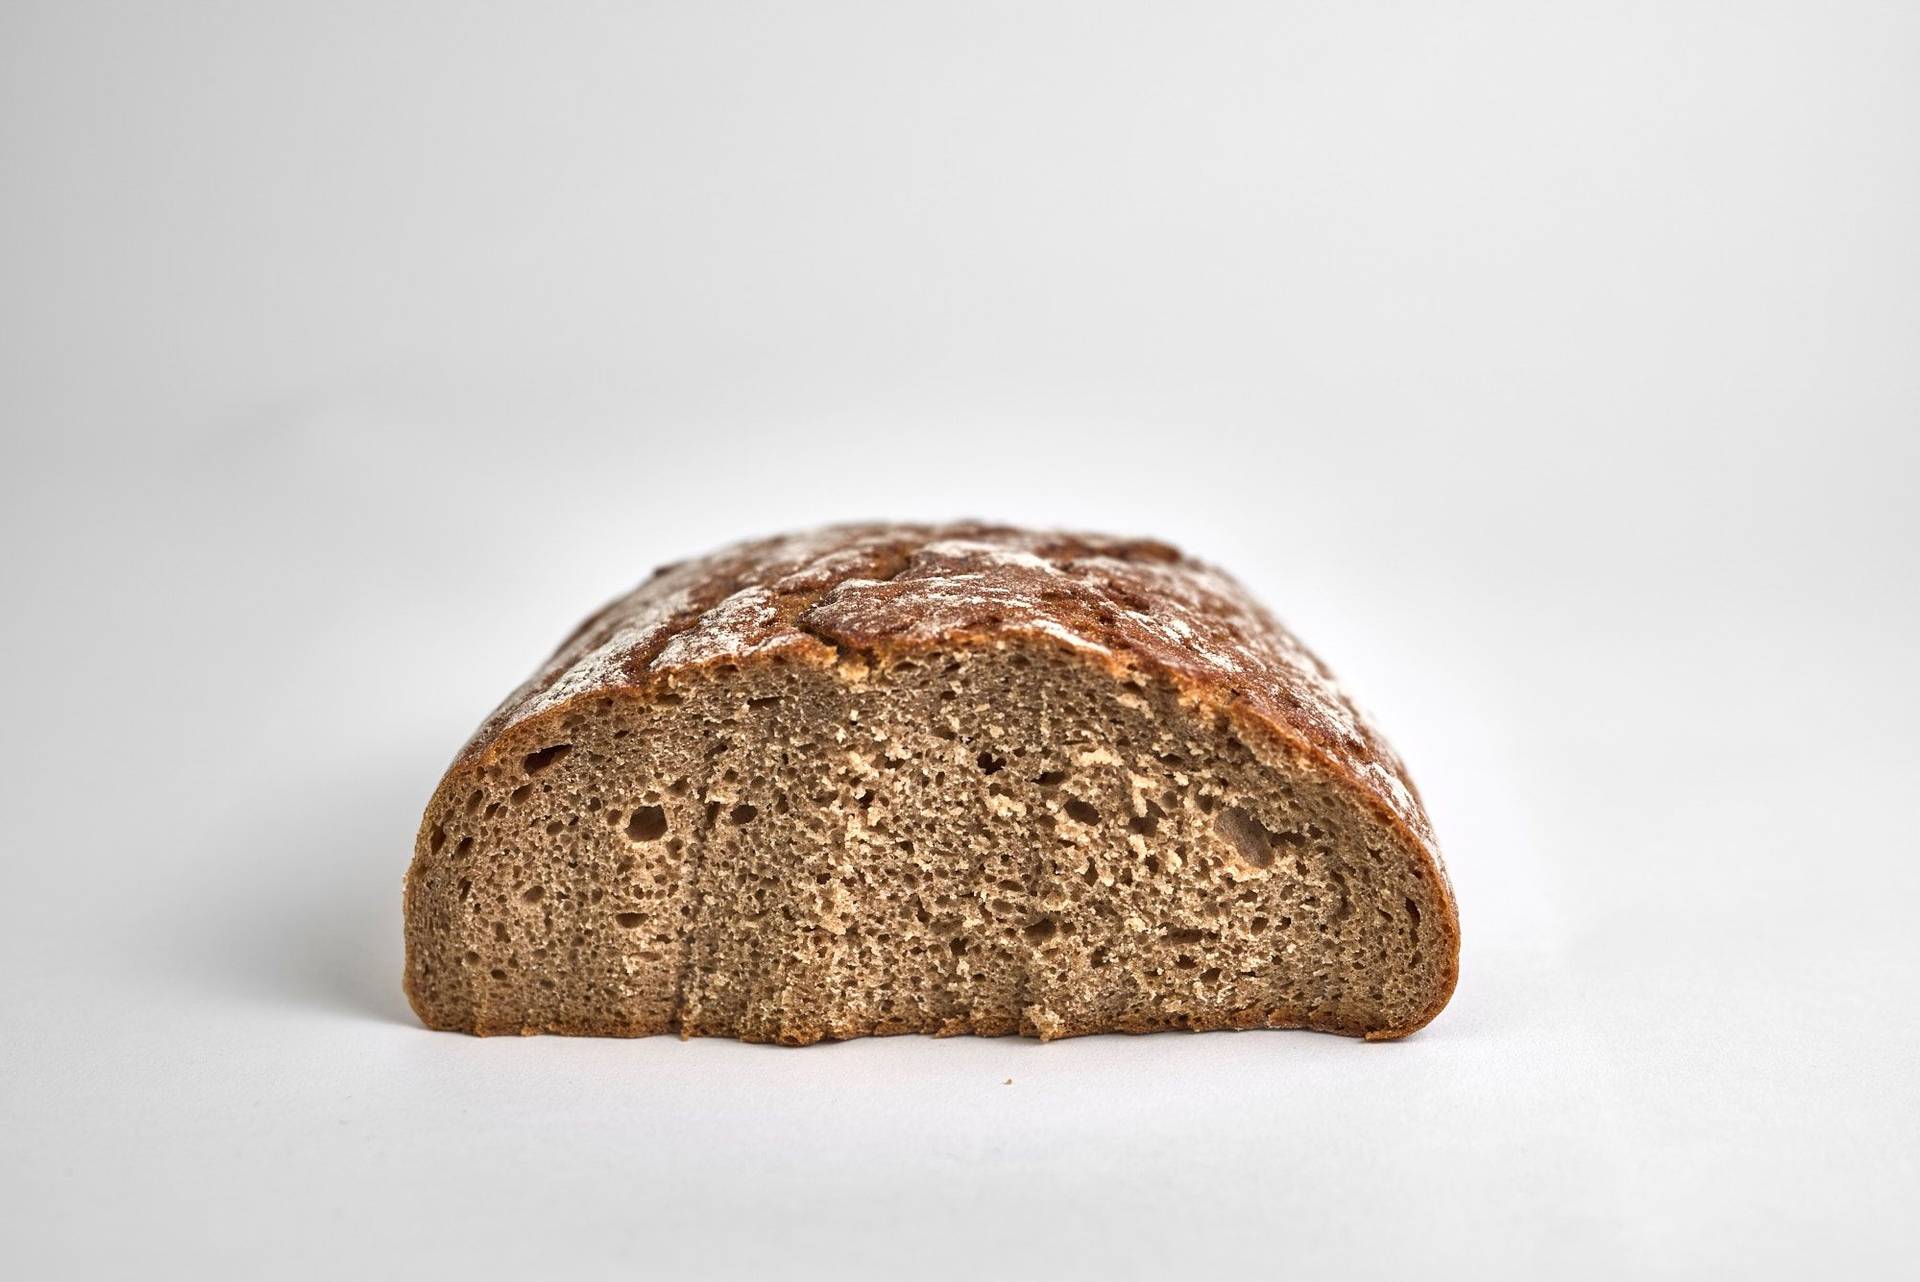 rye sourdough bread on white background